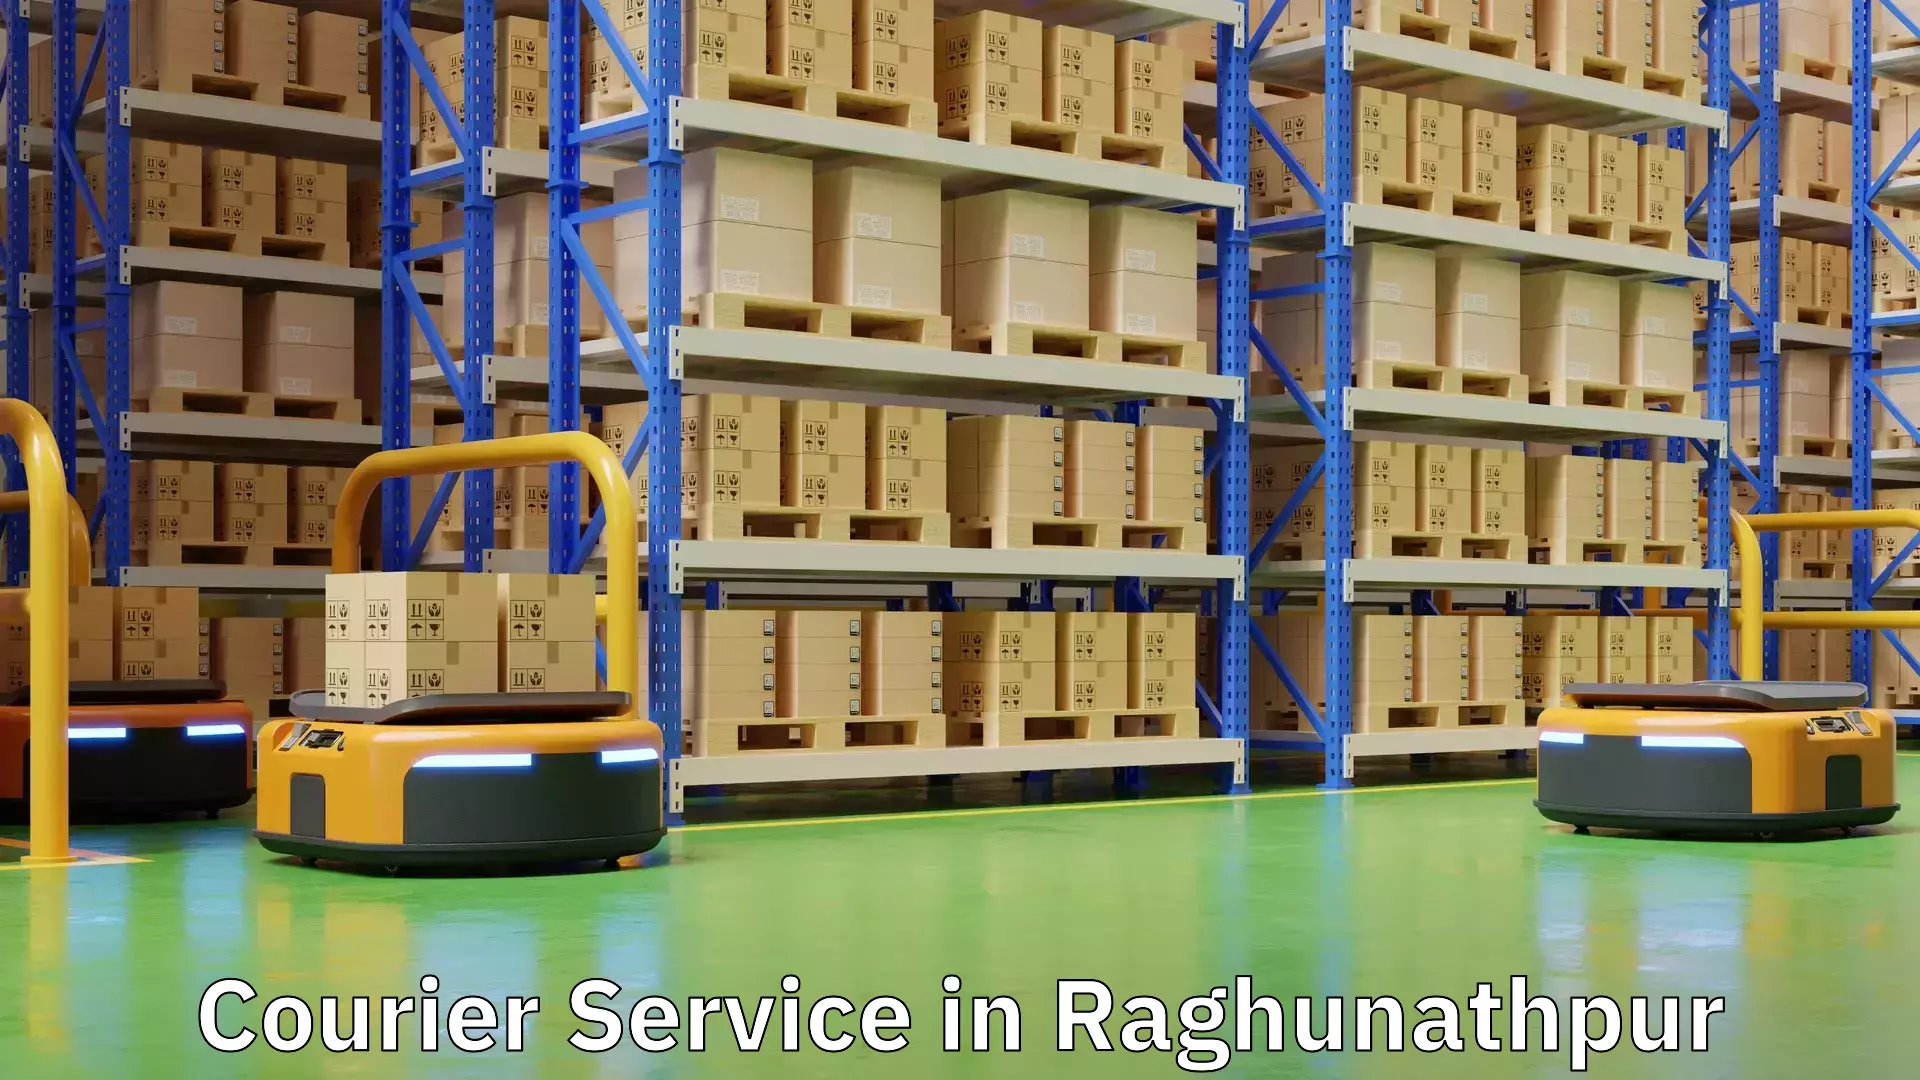 Modern delivery technologies in Raghunathpur